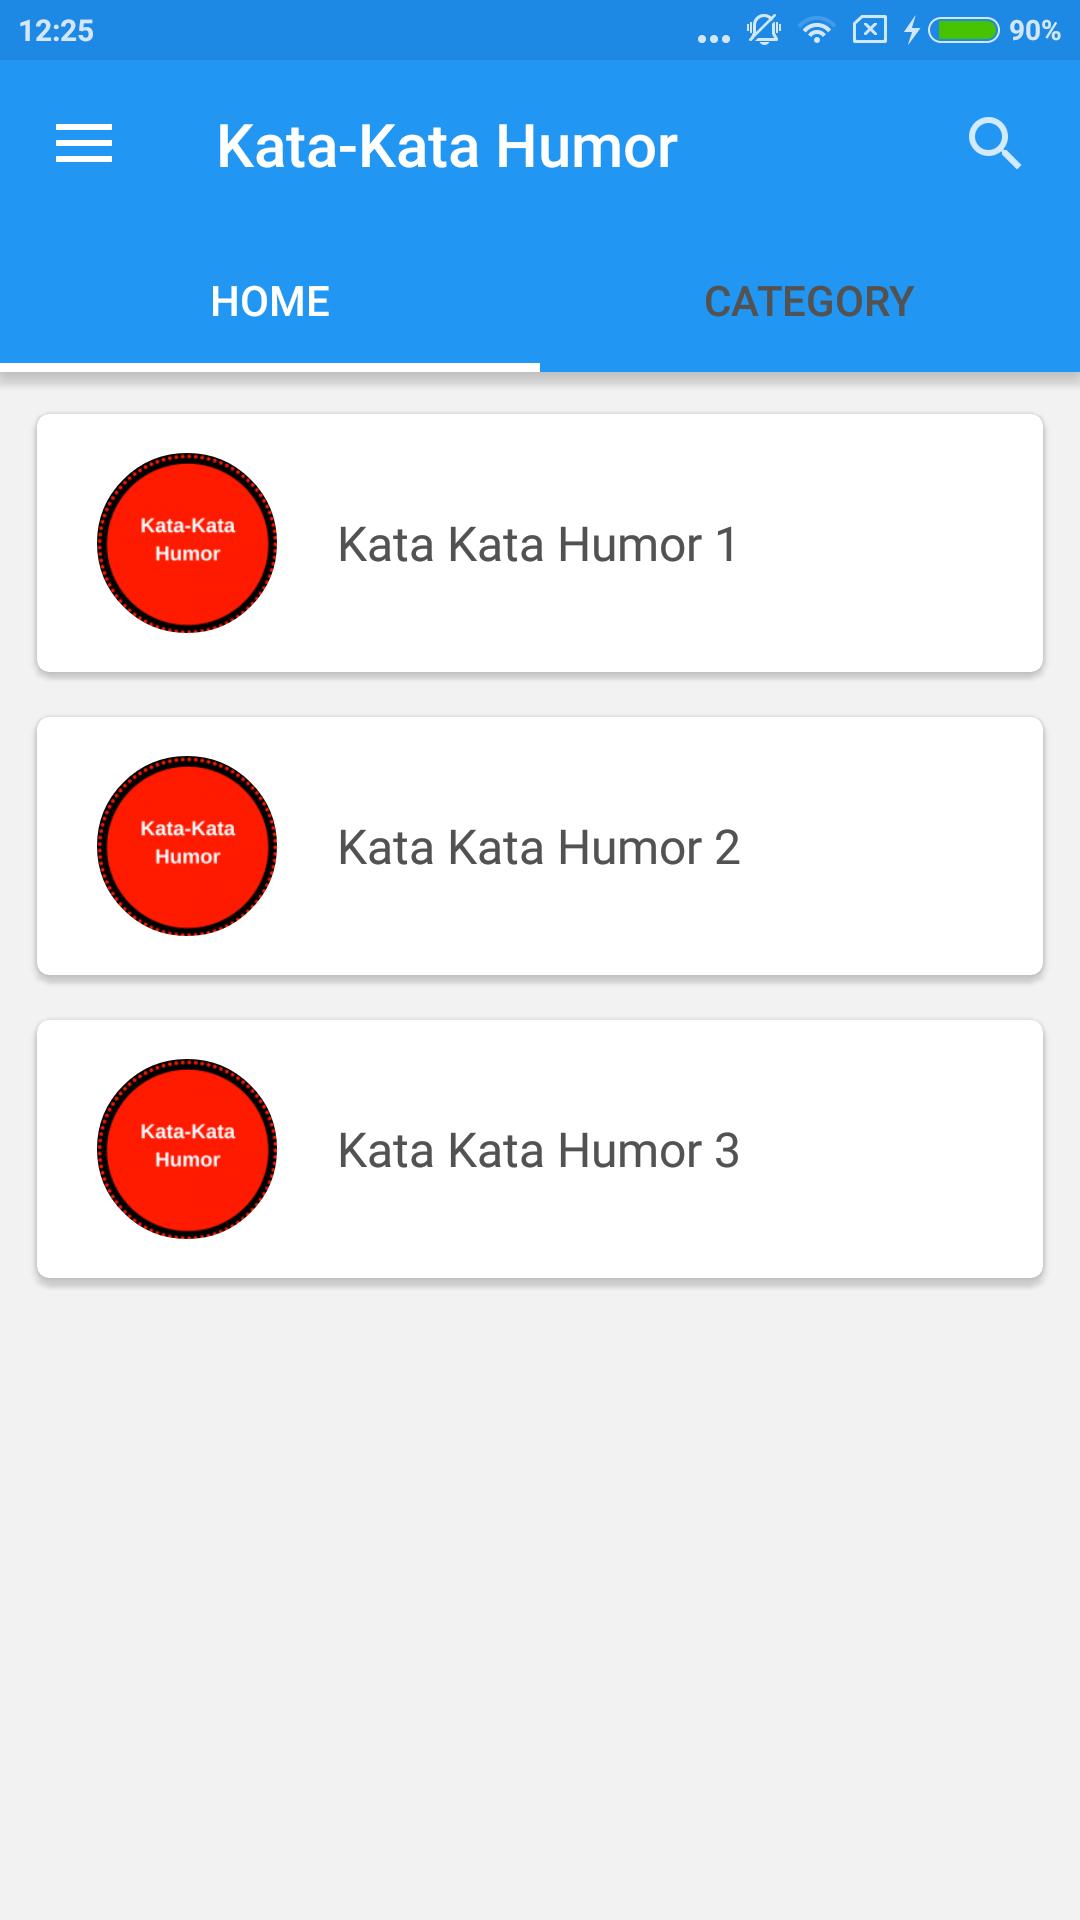 Kata Kata Humor Lucu For Android Apk Download